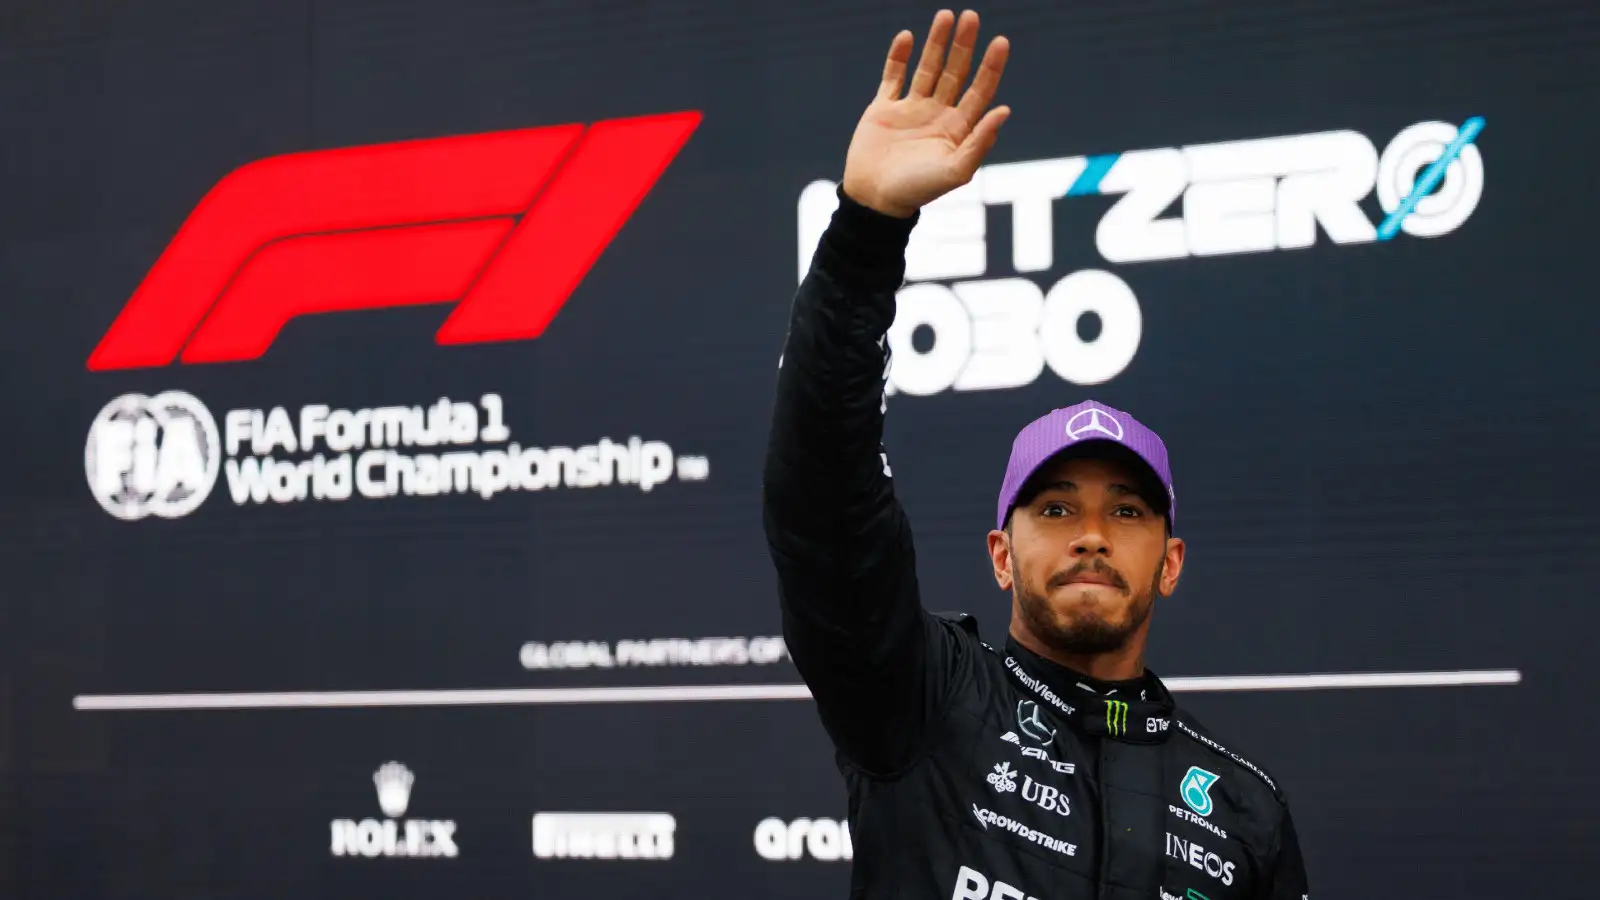 Lewis Hamilton, Mercedes F1 driver, in the paddock at the 2023 Australian Grand Prix.